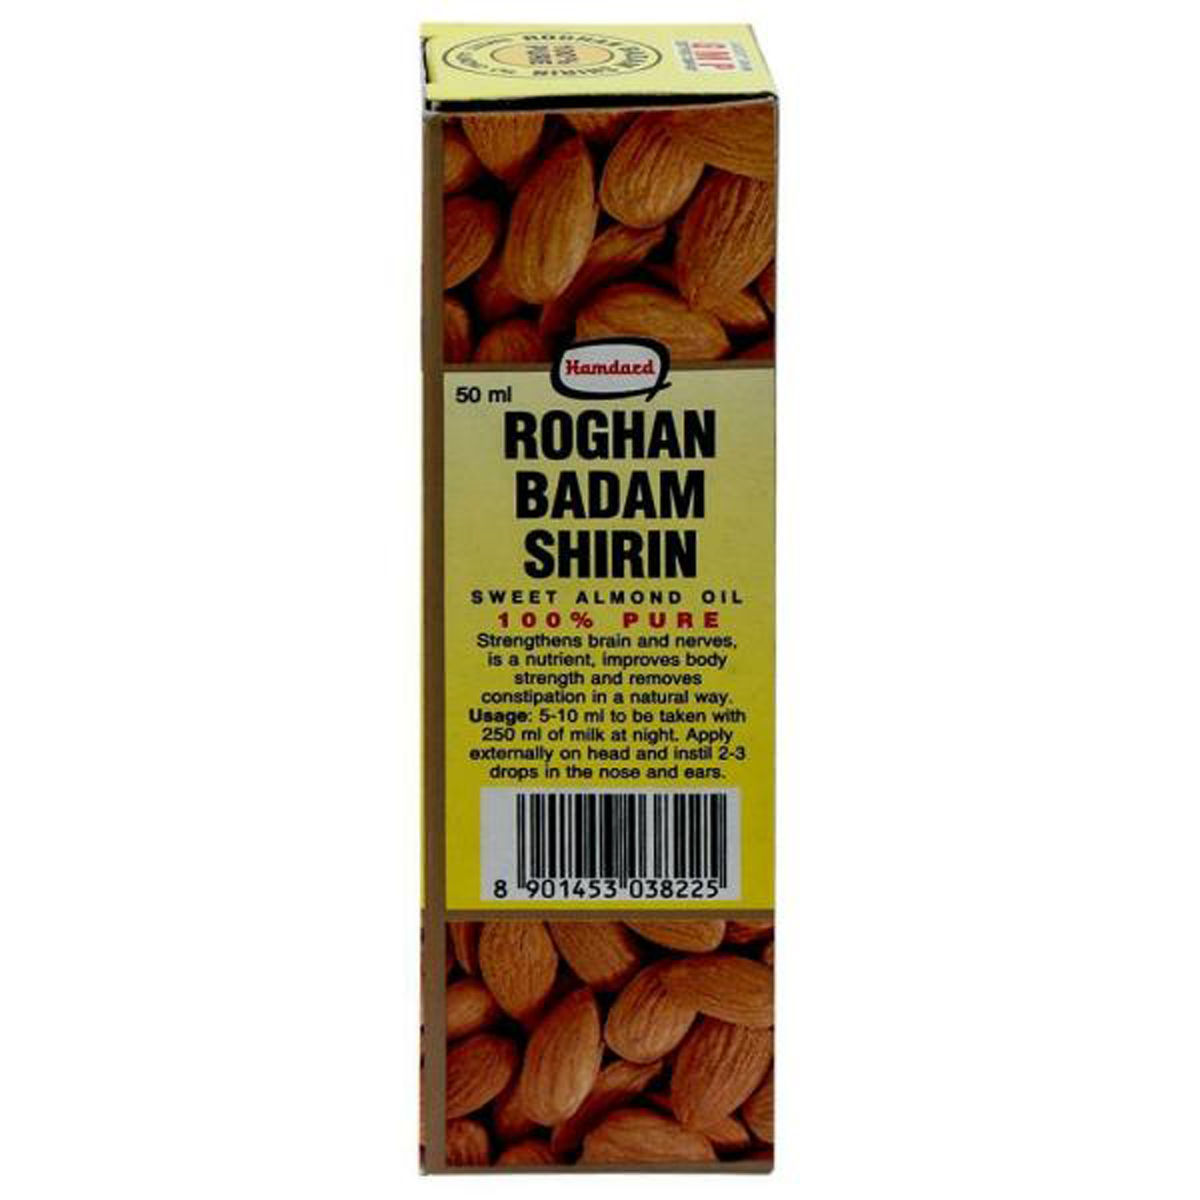 Hamdard Rogan Badam Shirin Almond Oil, 50 ml, Pack of 1 